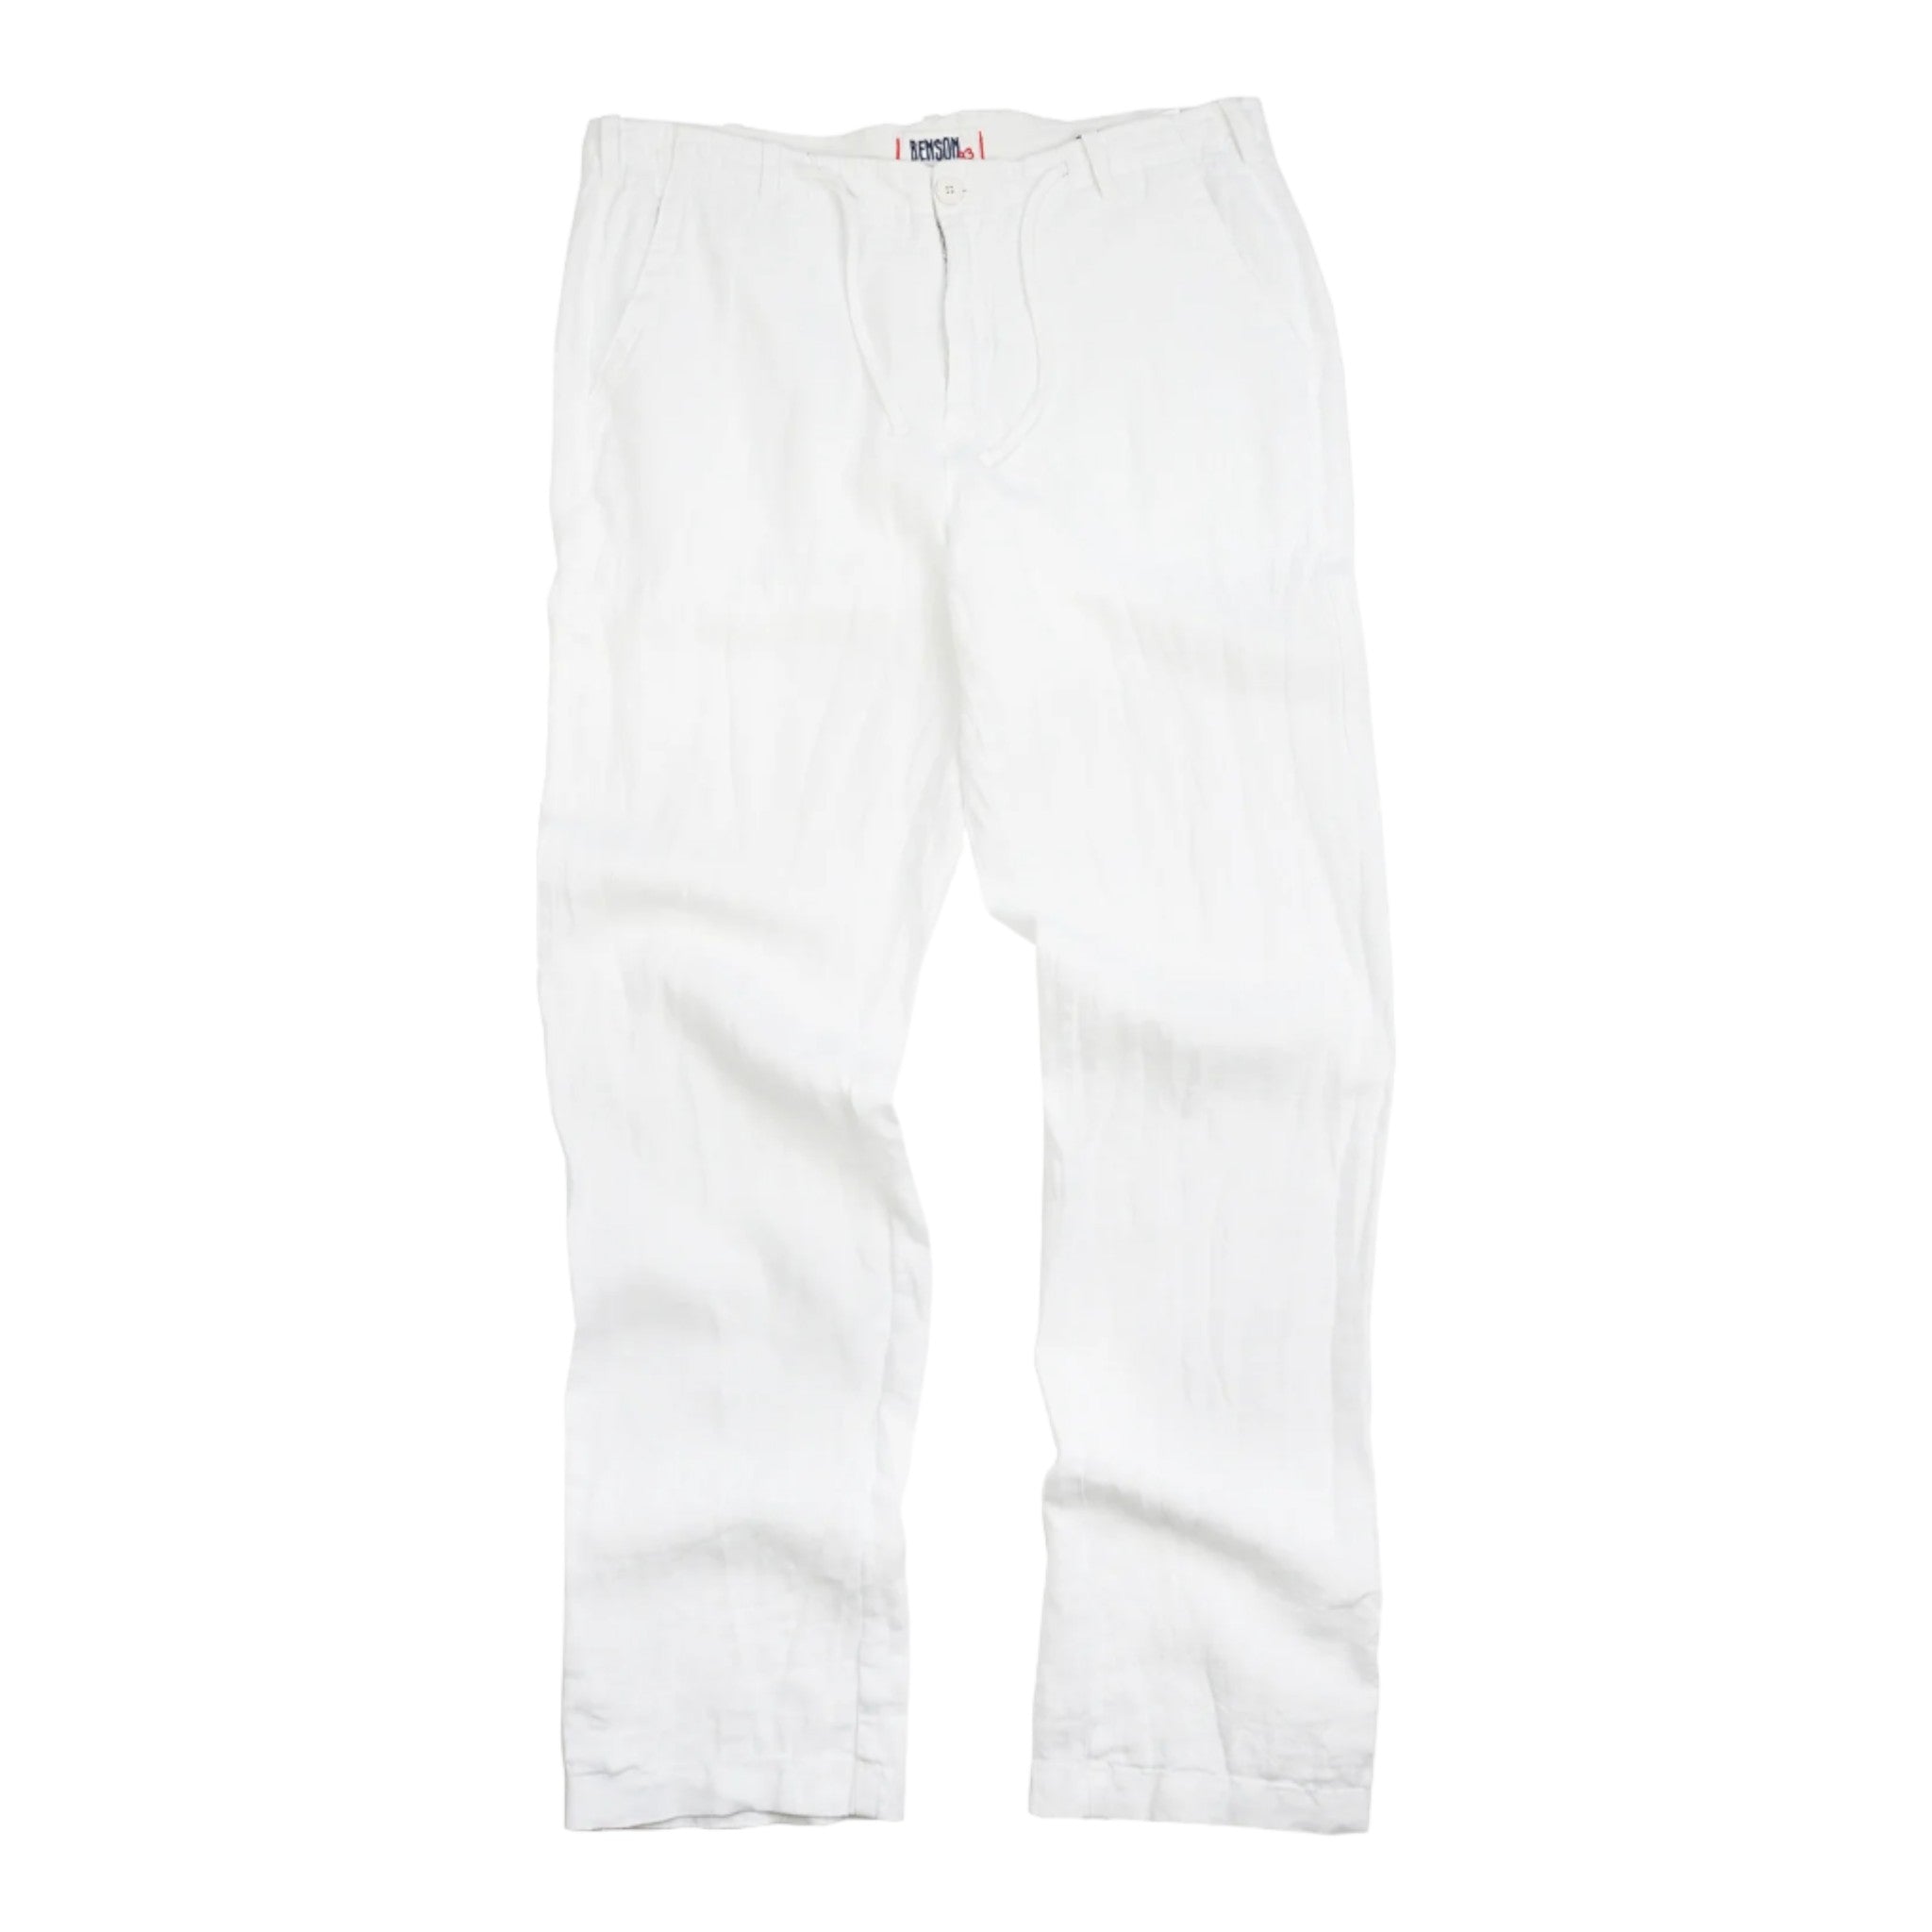 Benson - Key West Linen Pant - White